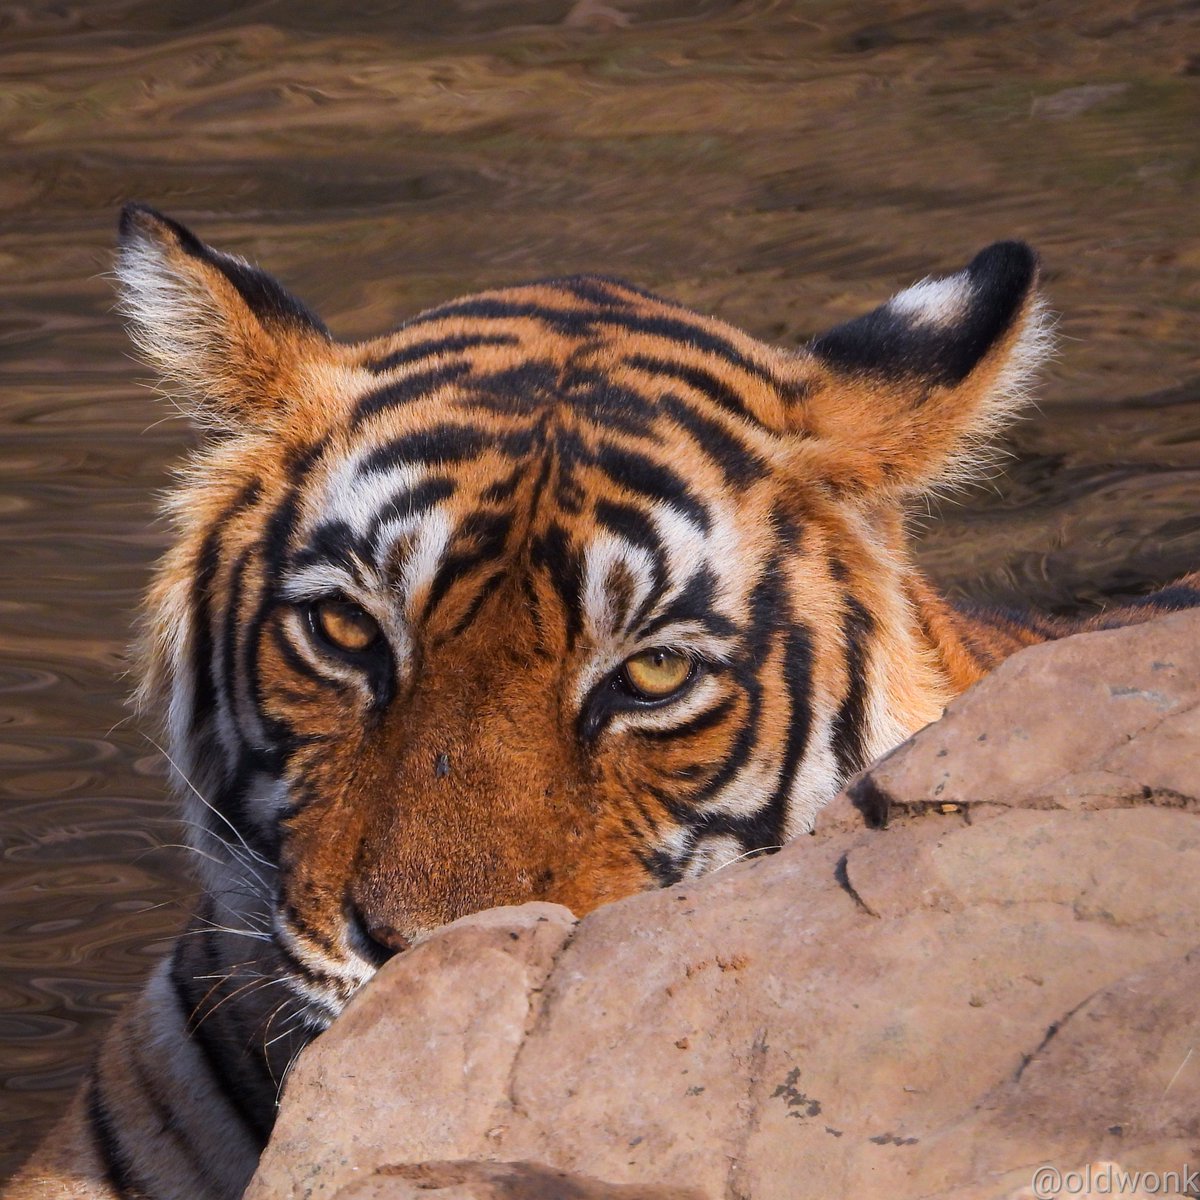 In the memory of @adityadickysin, a tiger we lost too soon. #TigersForDicky